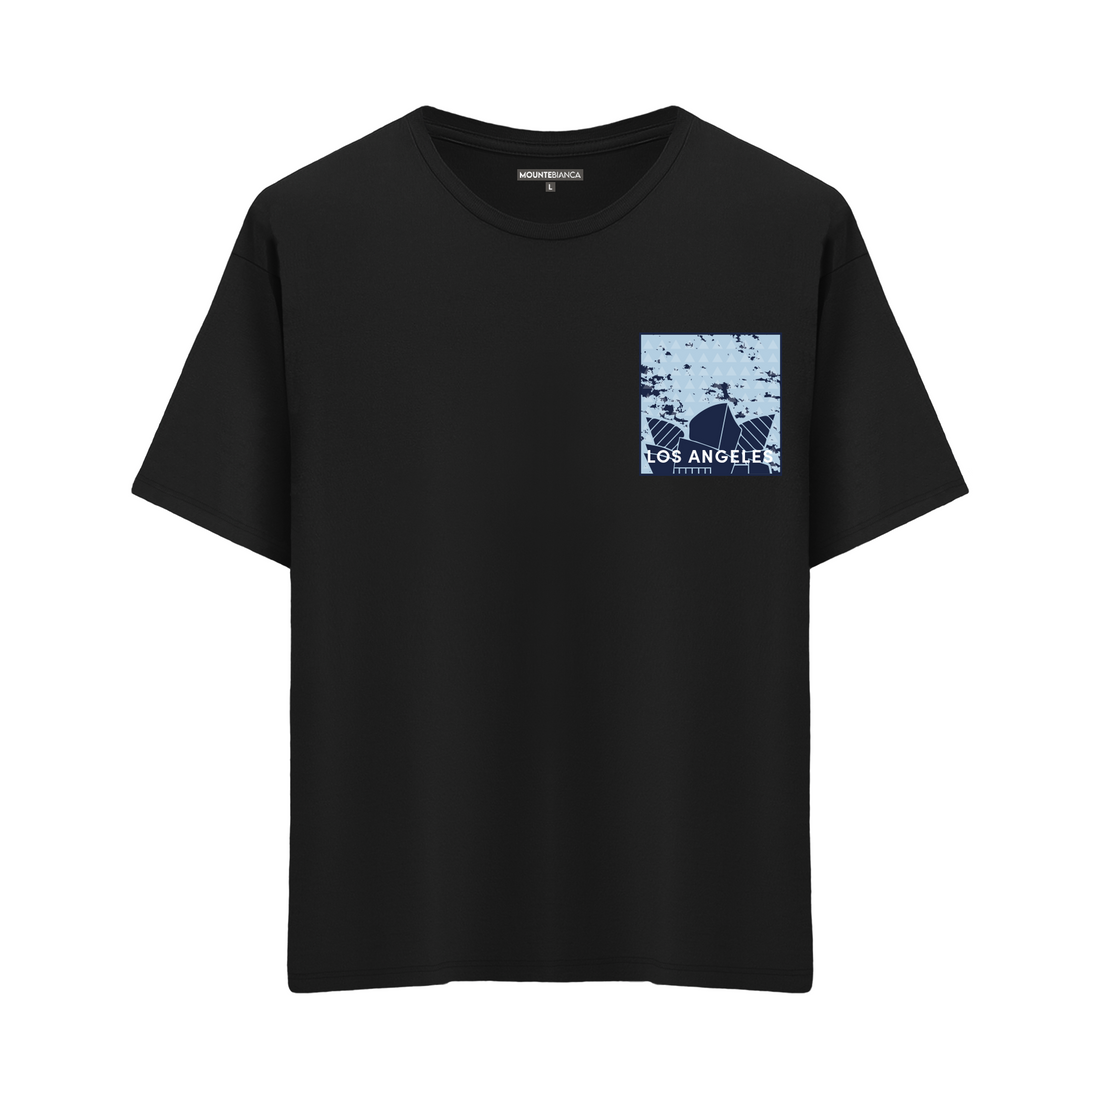 Los Angeles - Oversize T-shirt